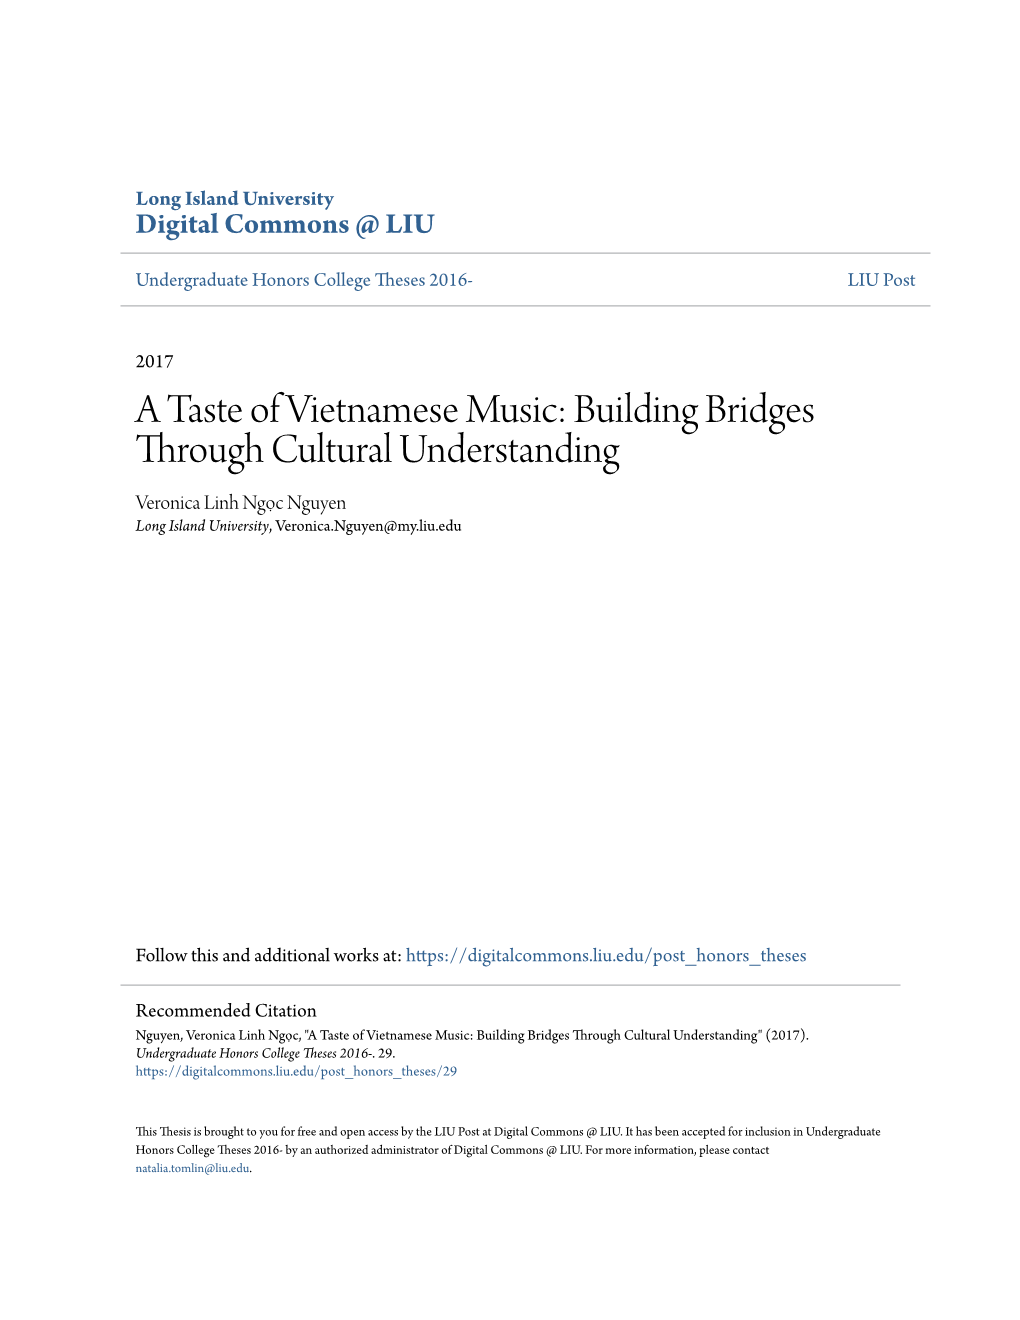 A Taste of Vietnamese Music: Building Bridges Through Cultural Understanding Veronica Linh Ngọc Nguyen Long Island University, Veronica.Nguyen@My.Liu.Edu